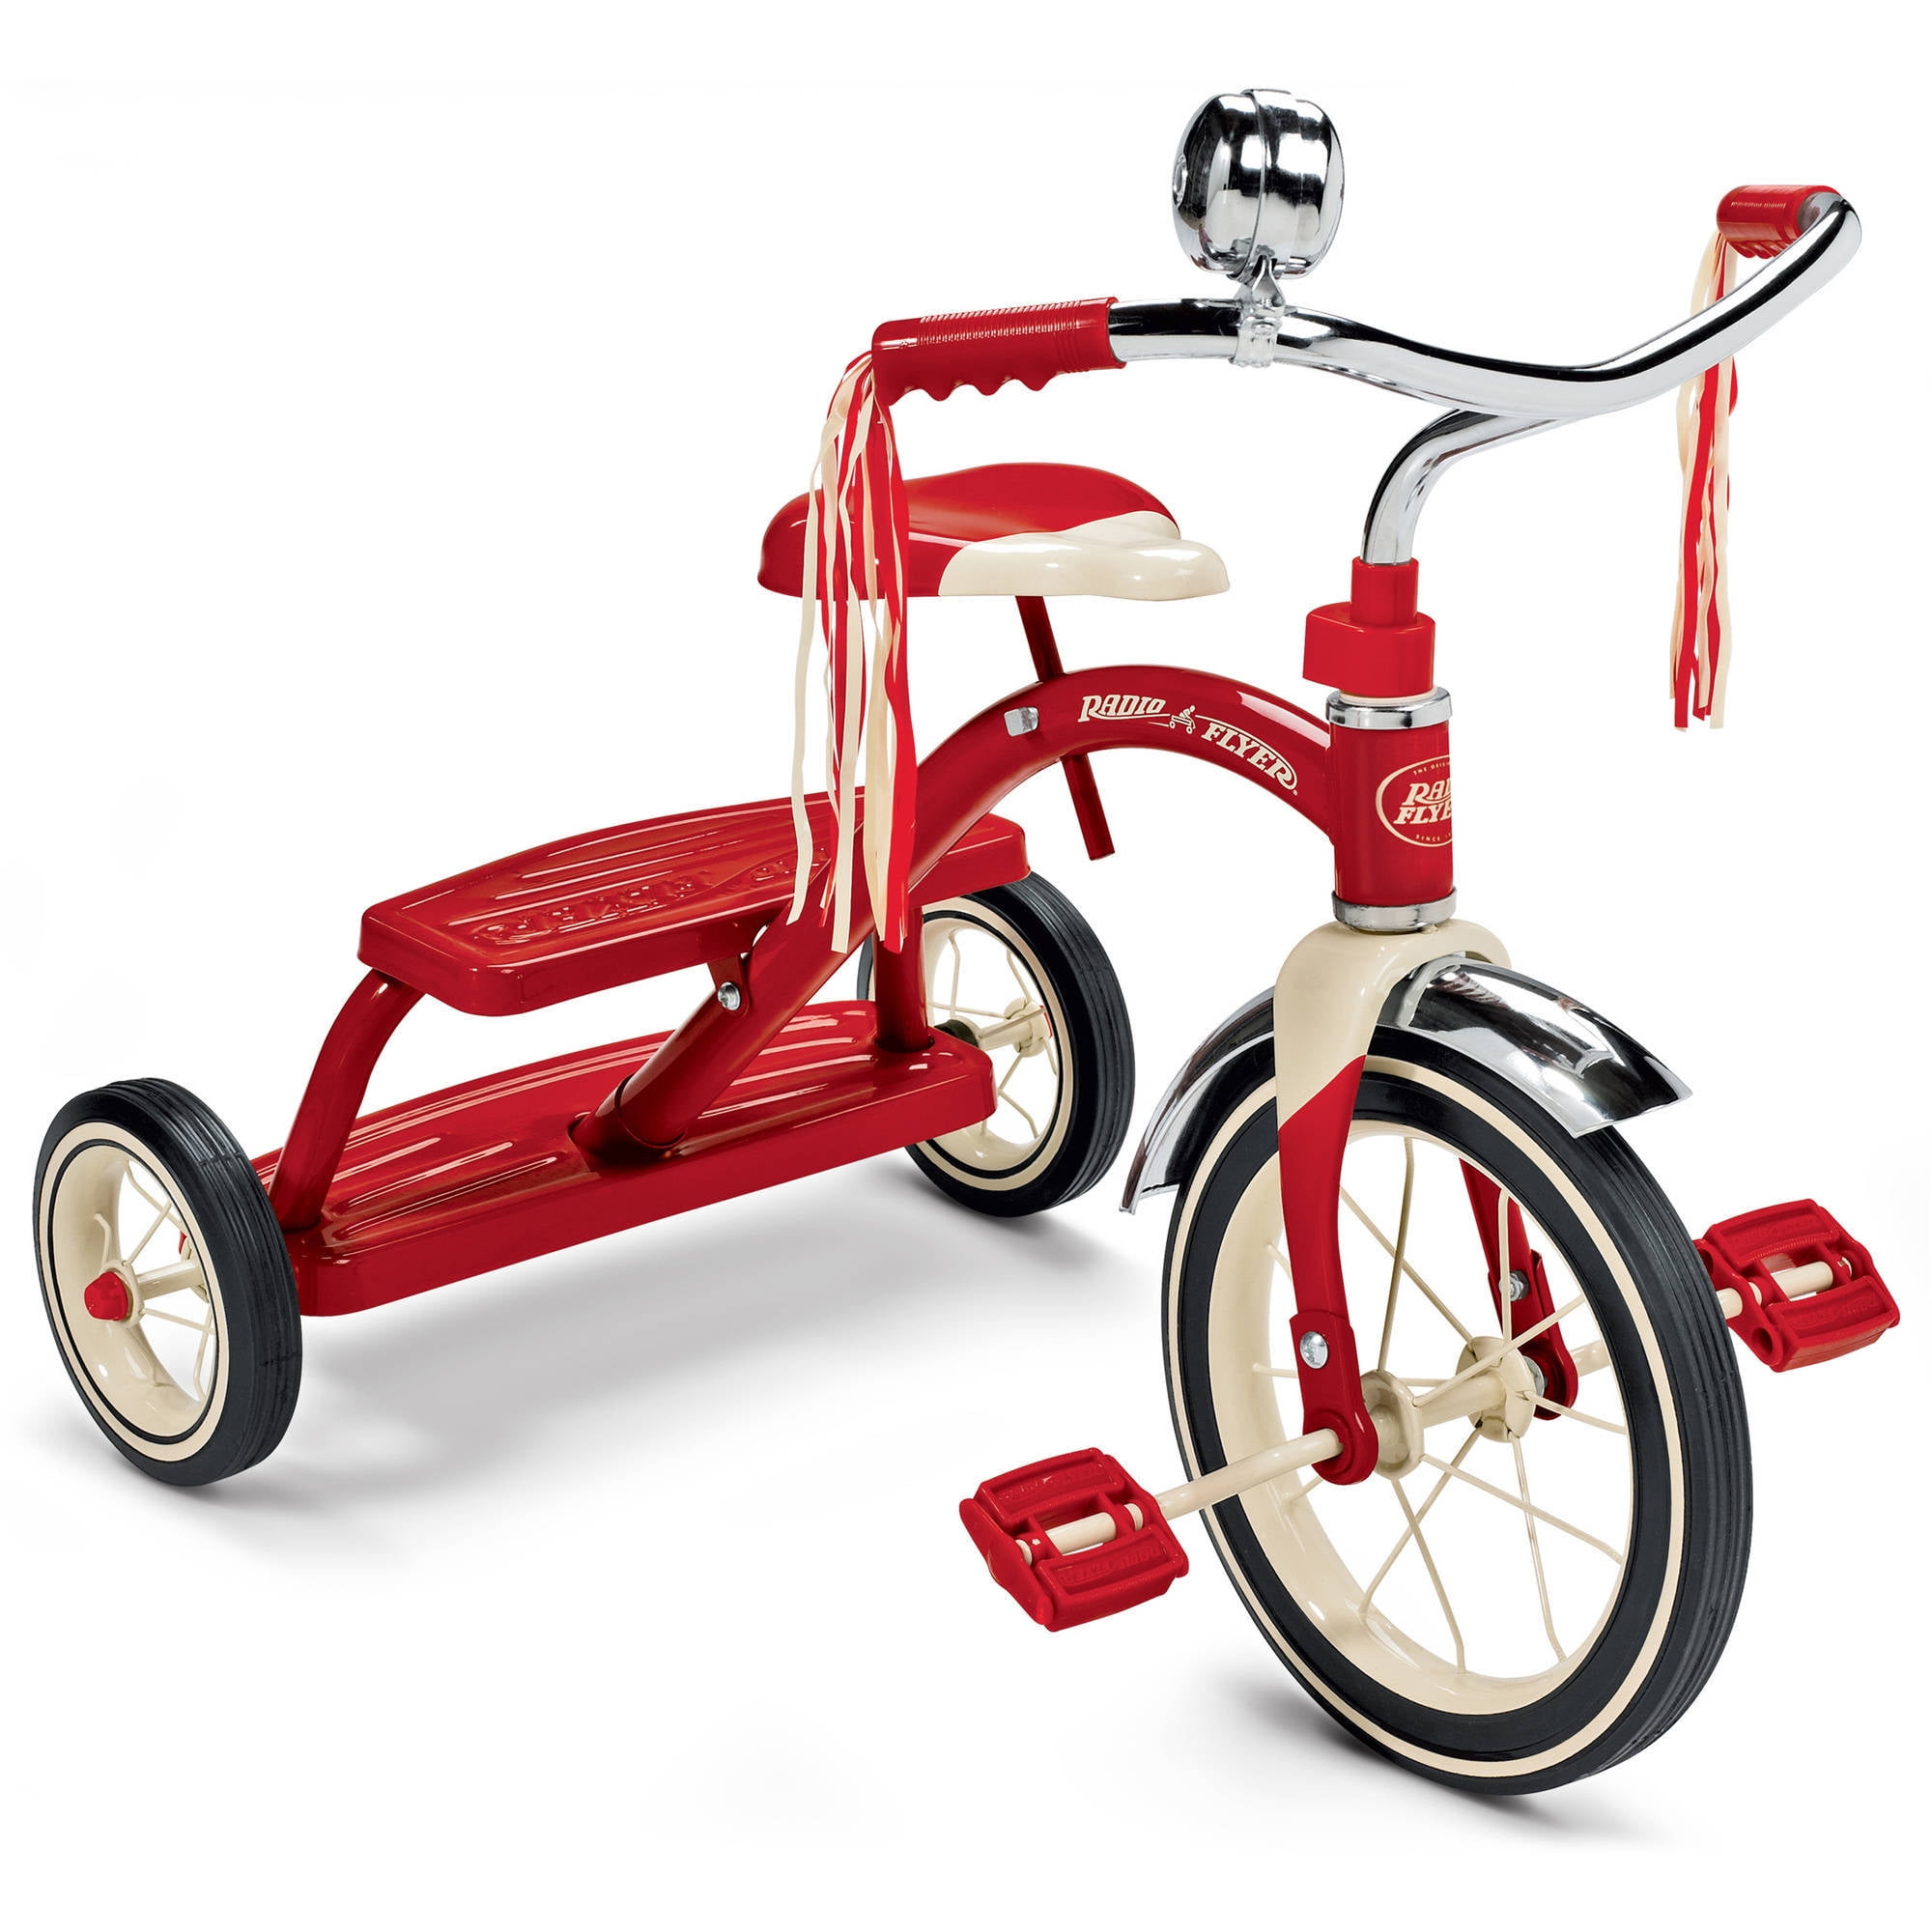 Toddler Tricycle Kids Trik... besrey 5 in 1 Toddler Bike for 1-3 Years Old Kids 